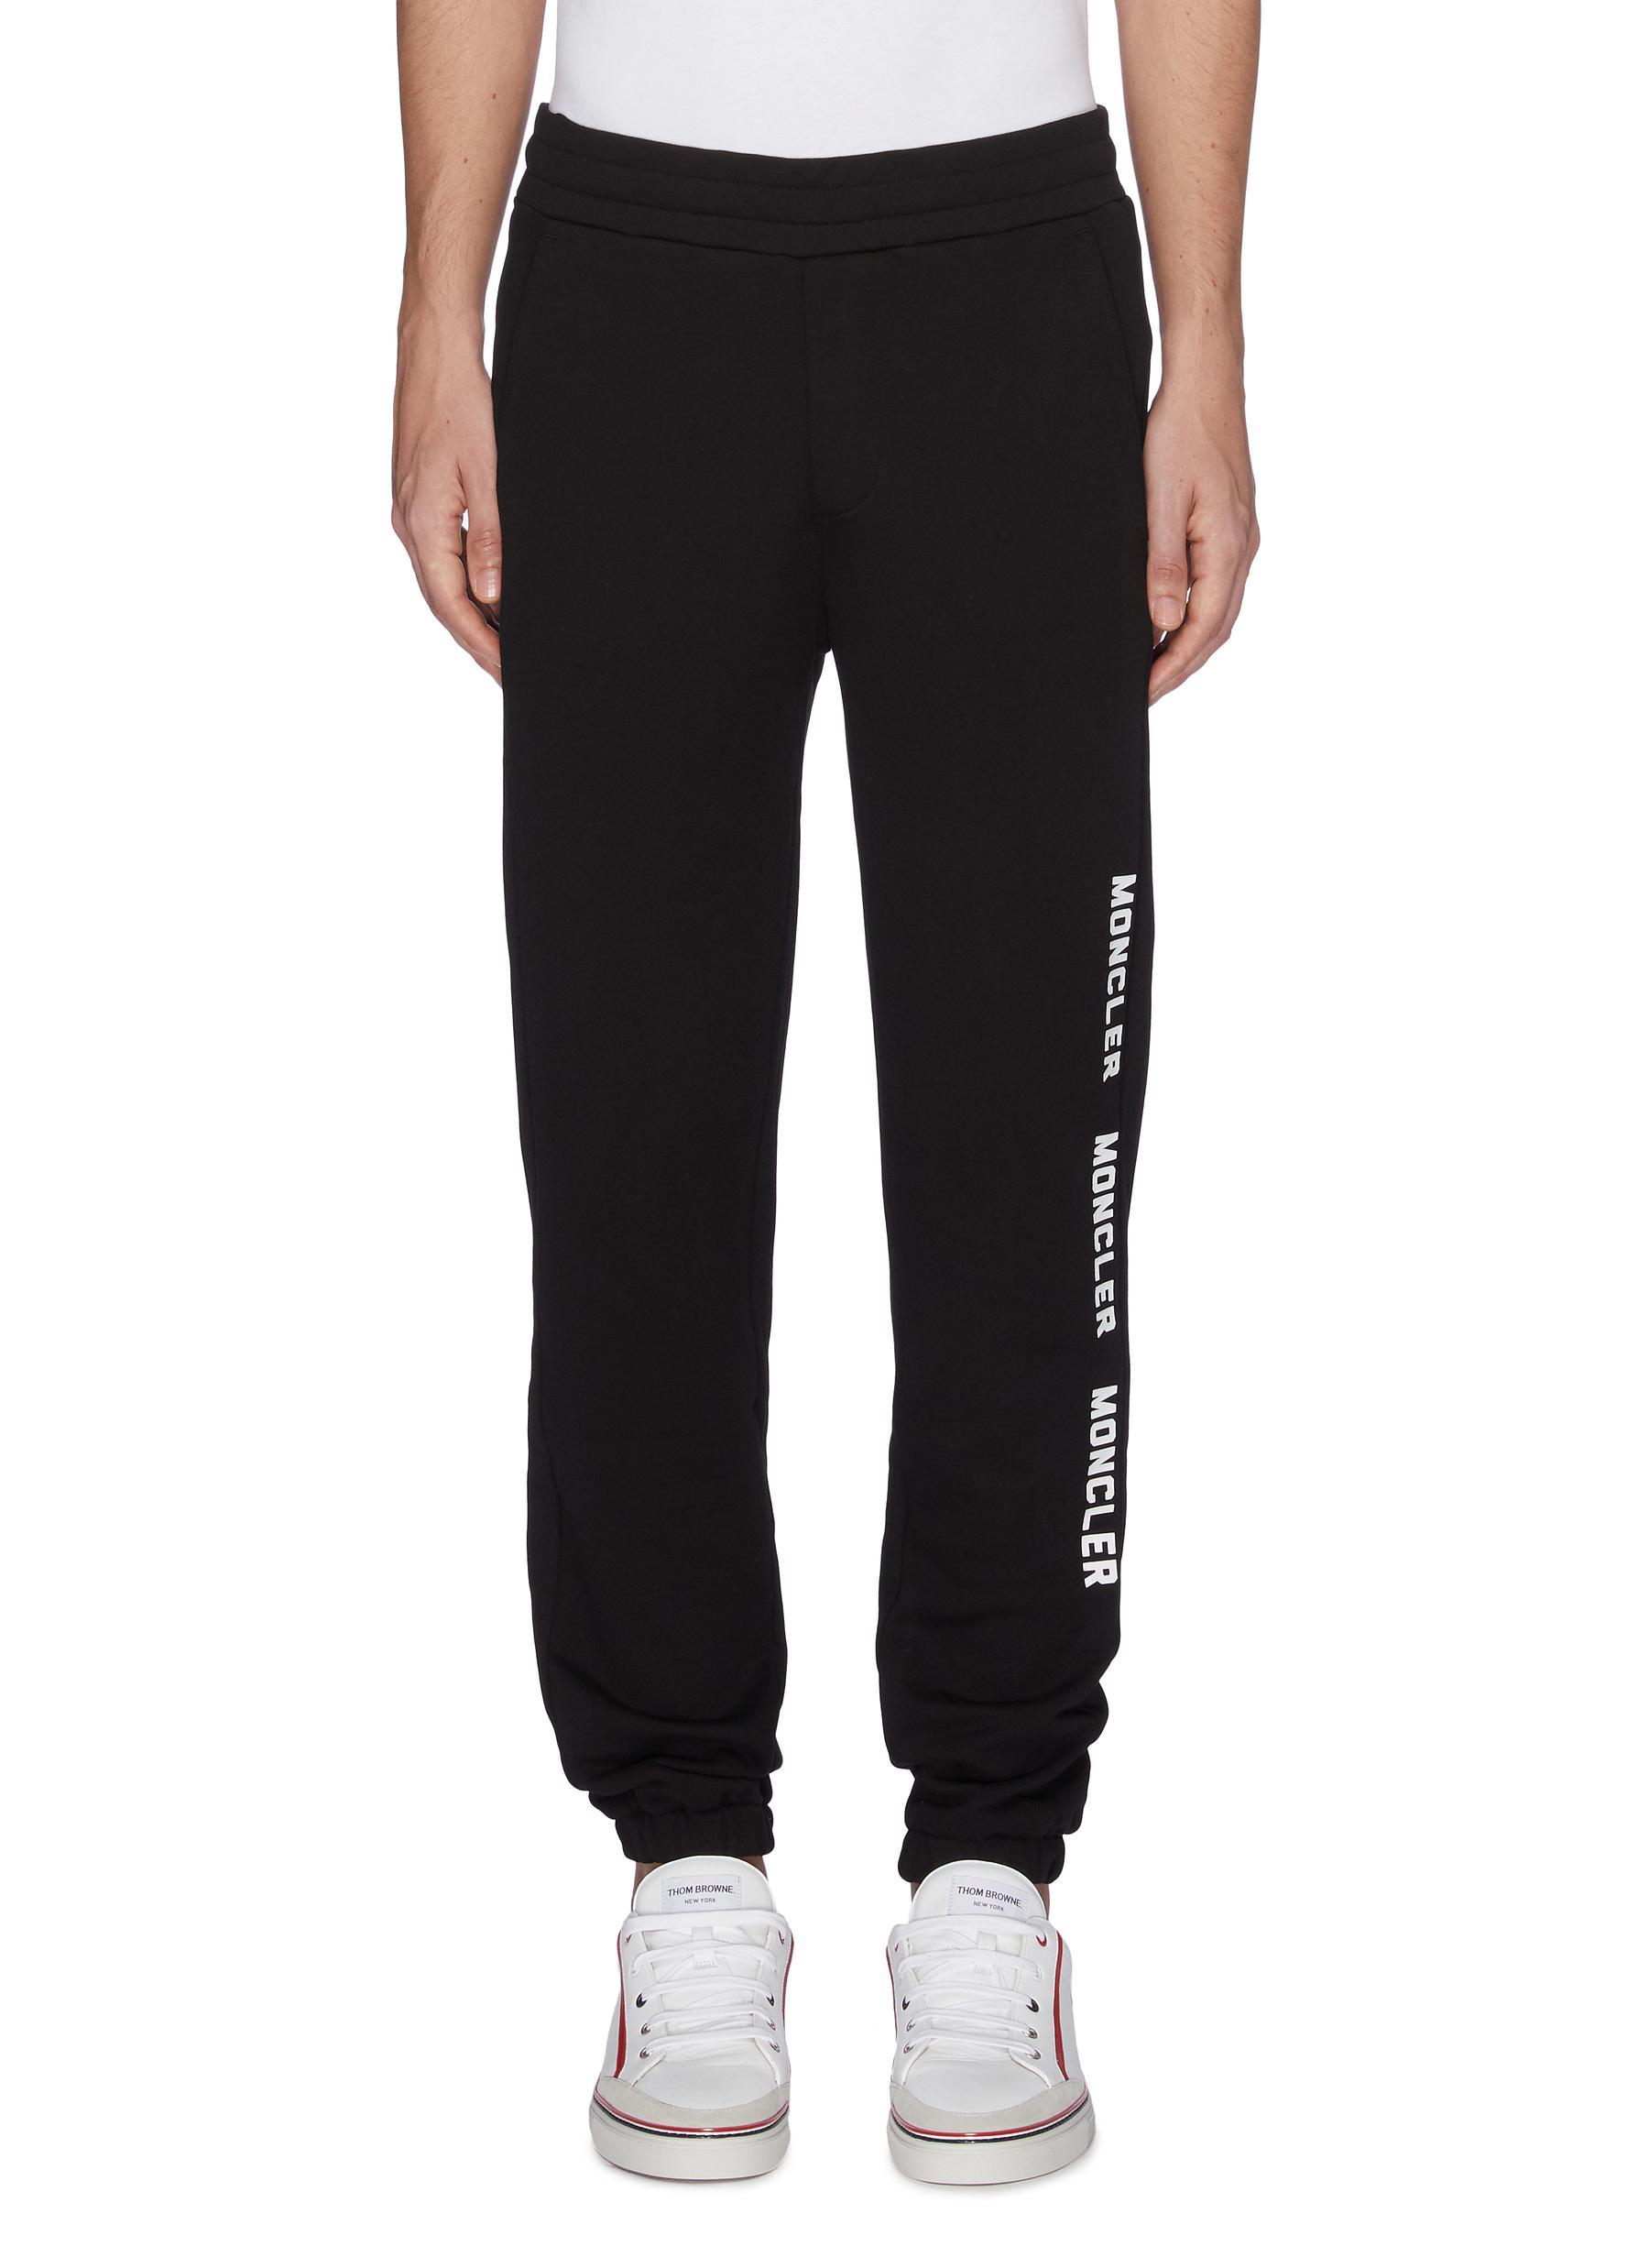 Moncler Cotton Logo Stripe Outseam jogging Pants in Black for Men - Lyst